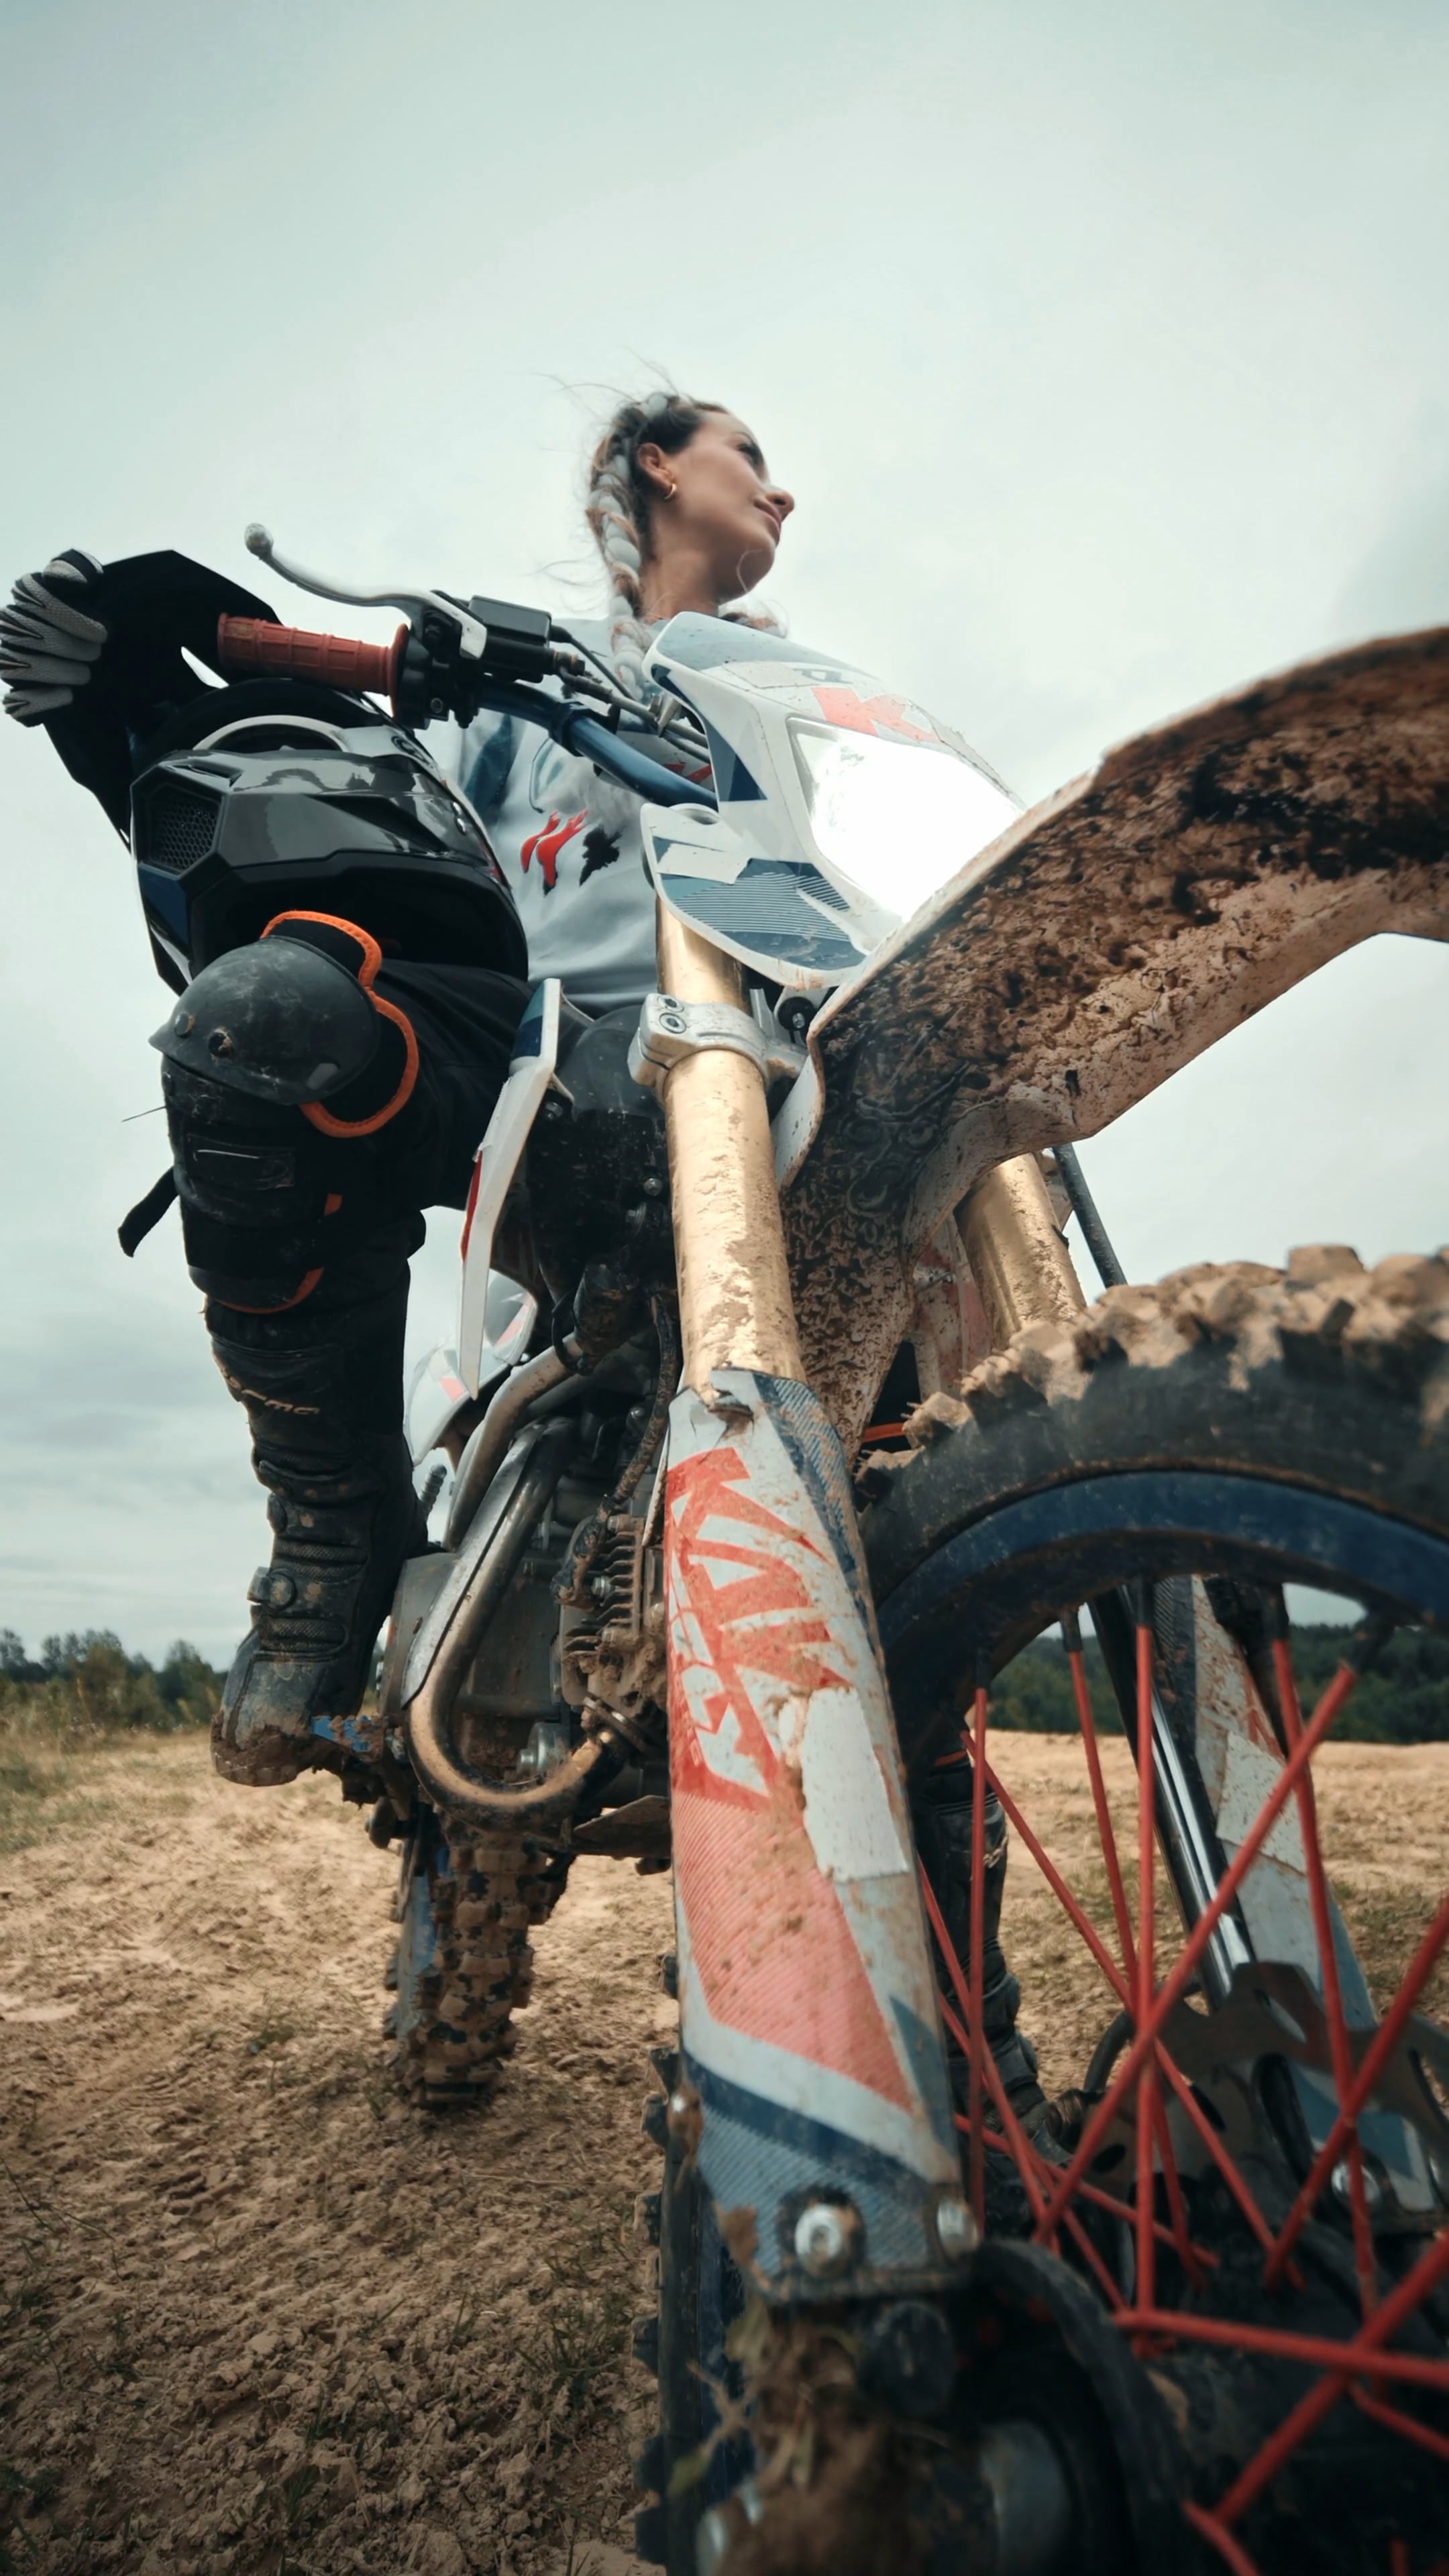 Enduro Motorbike: Women's Motocross Team, Dirt Biking, Protective Suit And Helmet, Extreme Sports. 2160x3840 4K Wallpaper.